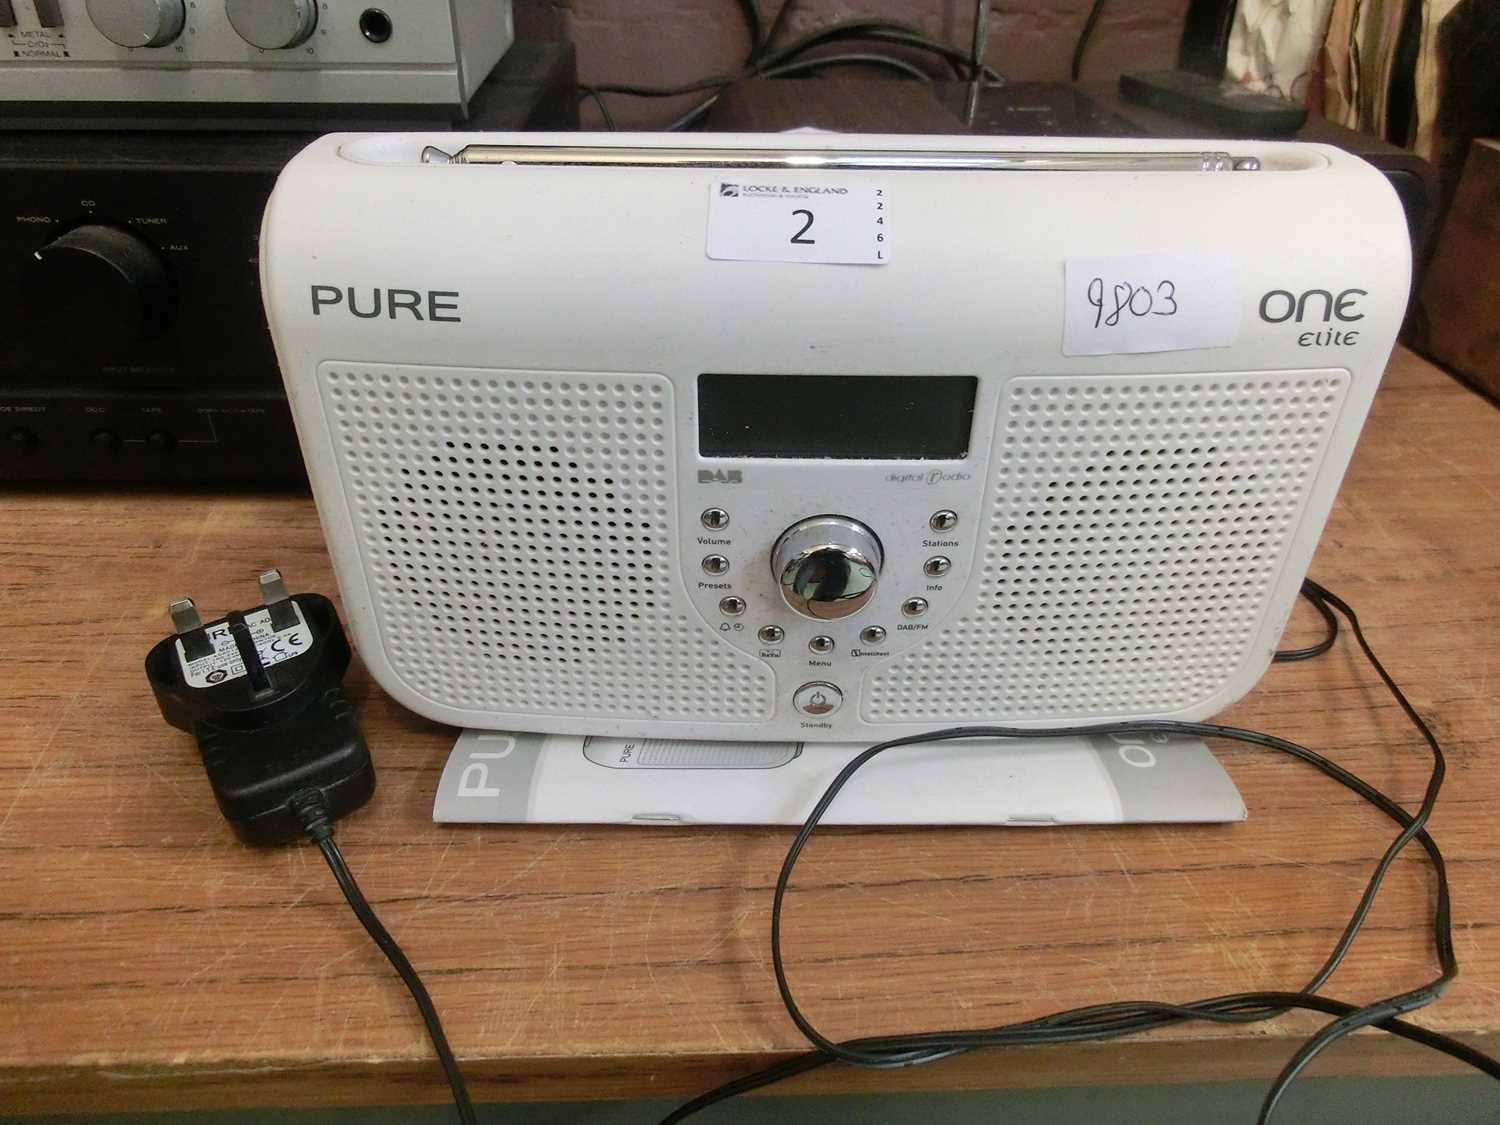 A Pure DAB radio